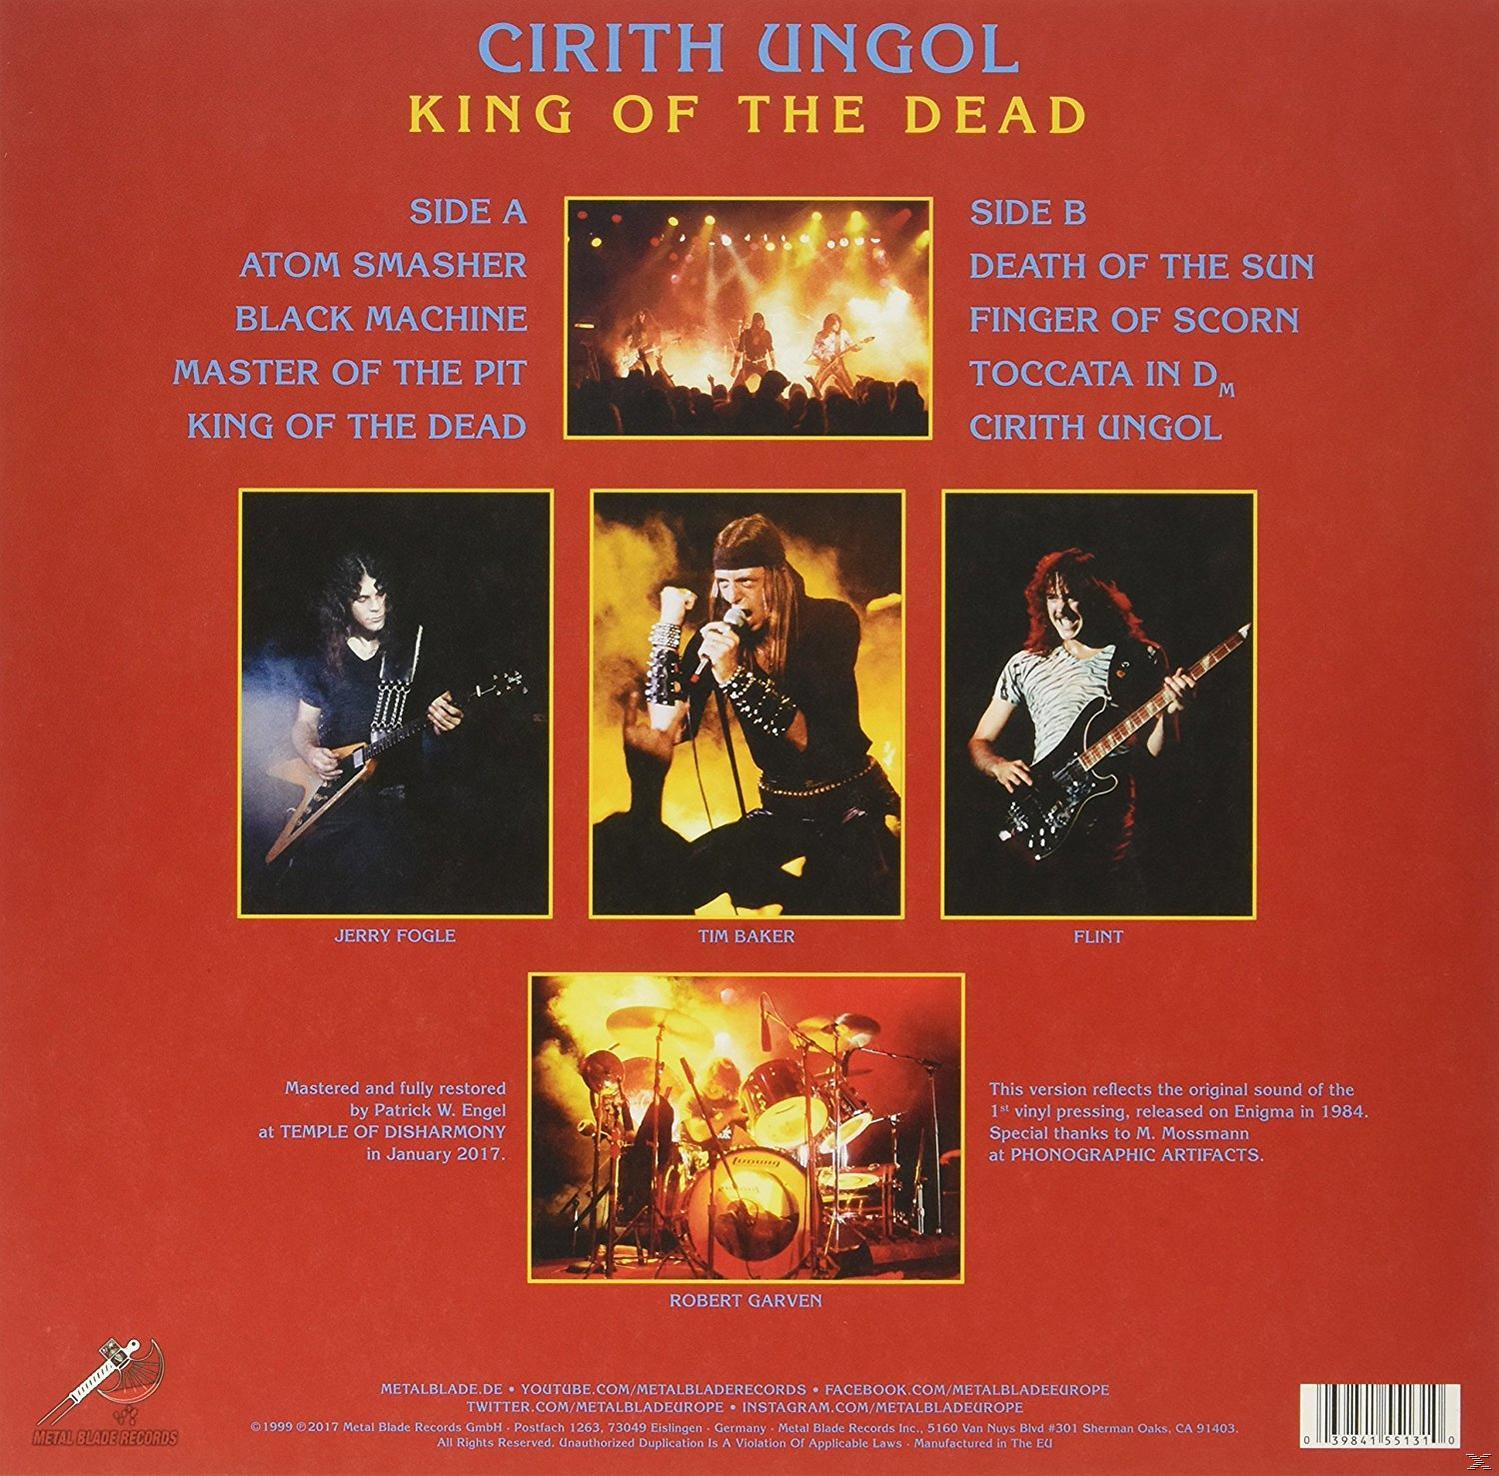 Black Vinyl Dead-180g Cirith Ed of (Vinyl) Ungol - - King the Ltd